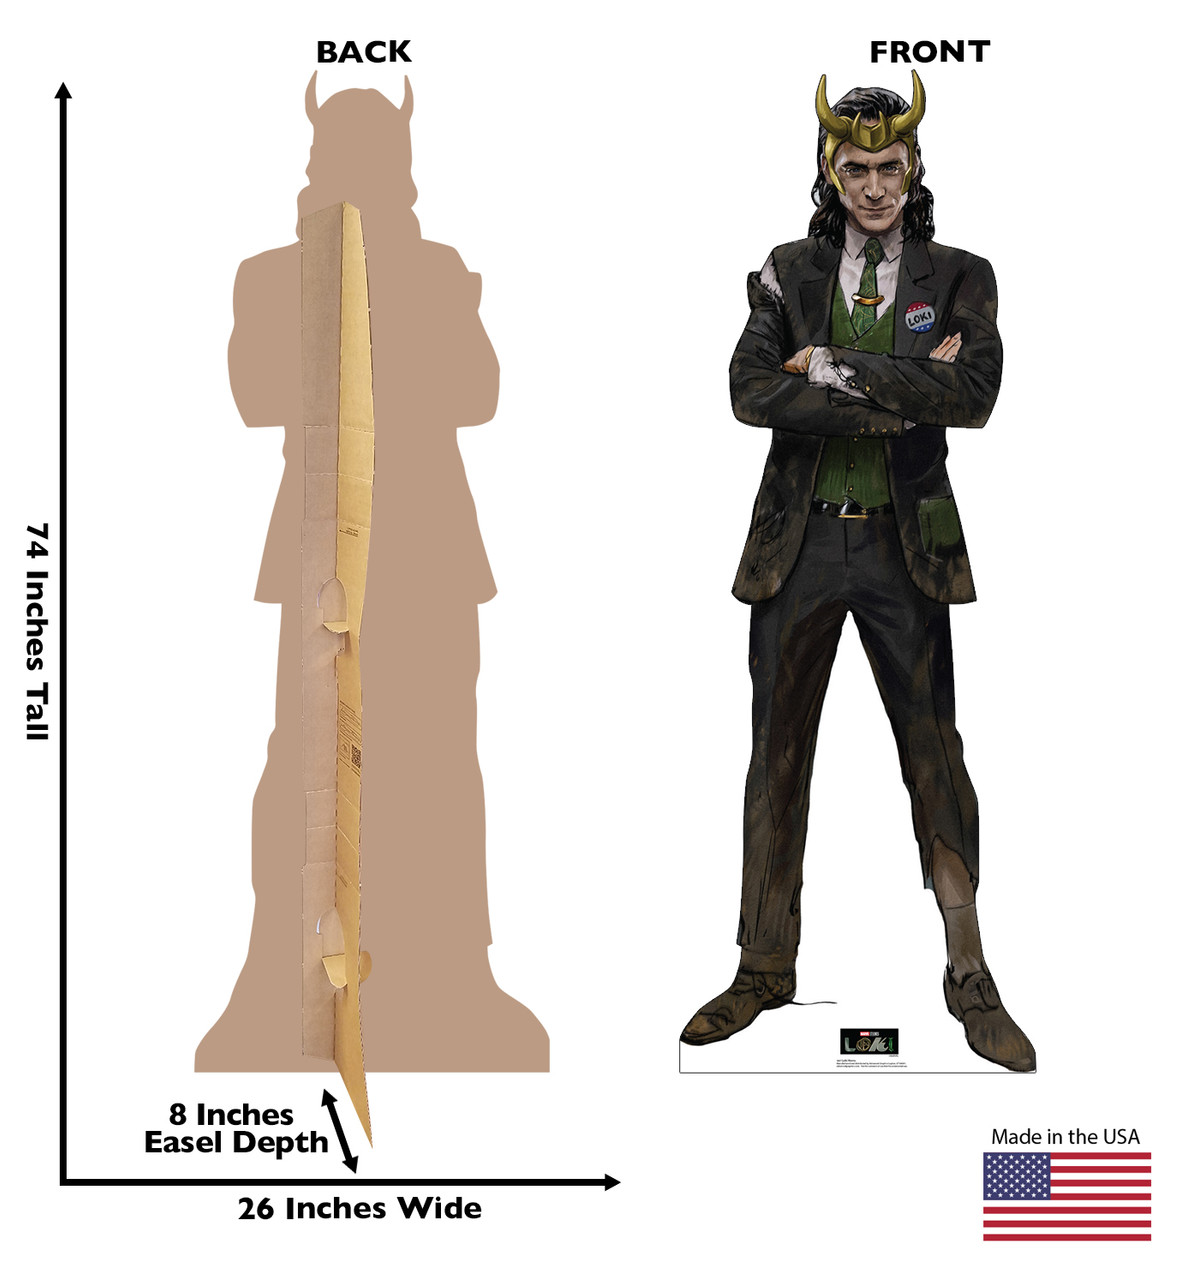 Life-size cardboard standee of Loki Horns from Marvel/Disney+ series Loki with model.